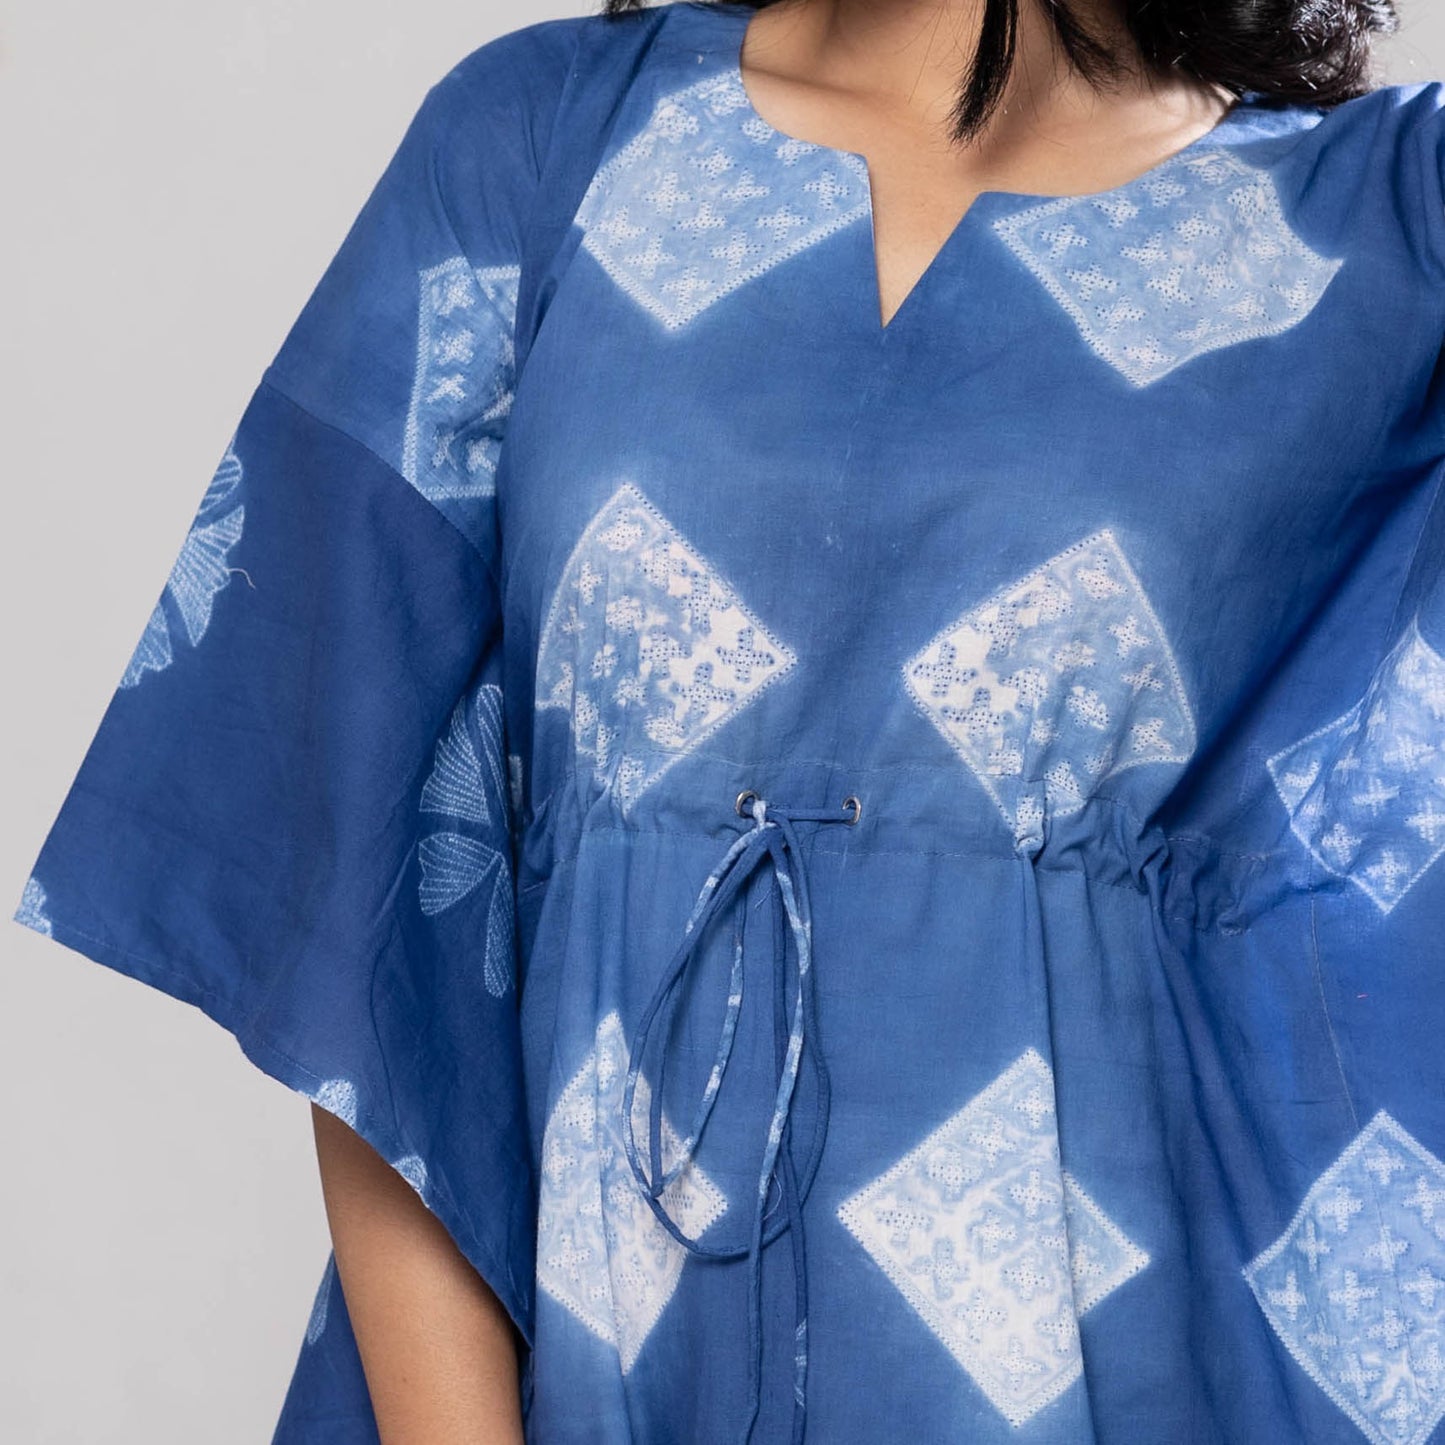 Blue - Indigo Nui Shibori Tie-Dye Cotton Kaftan Dress